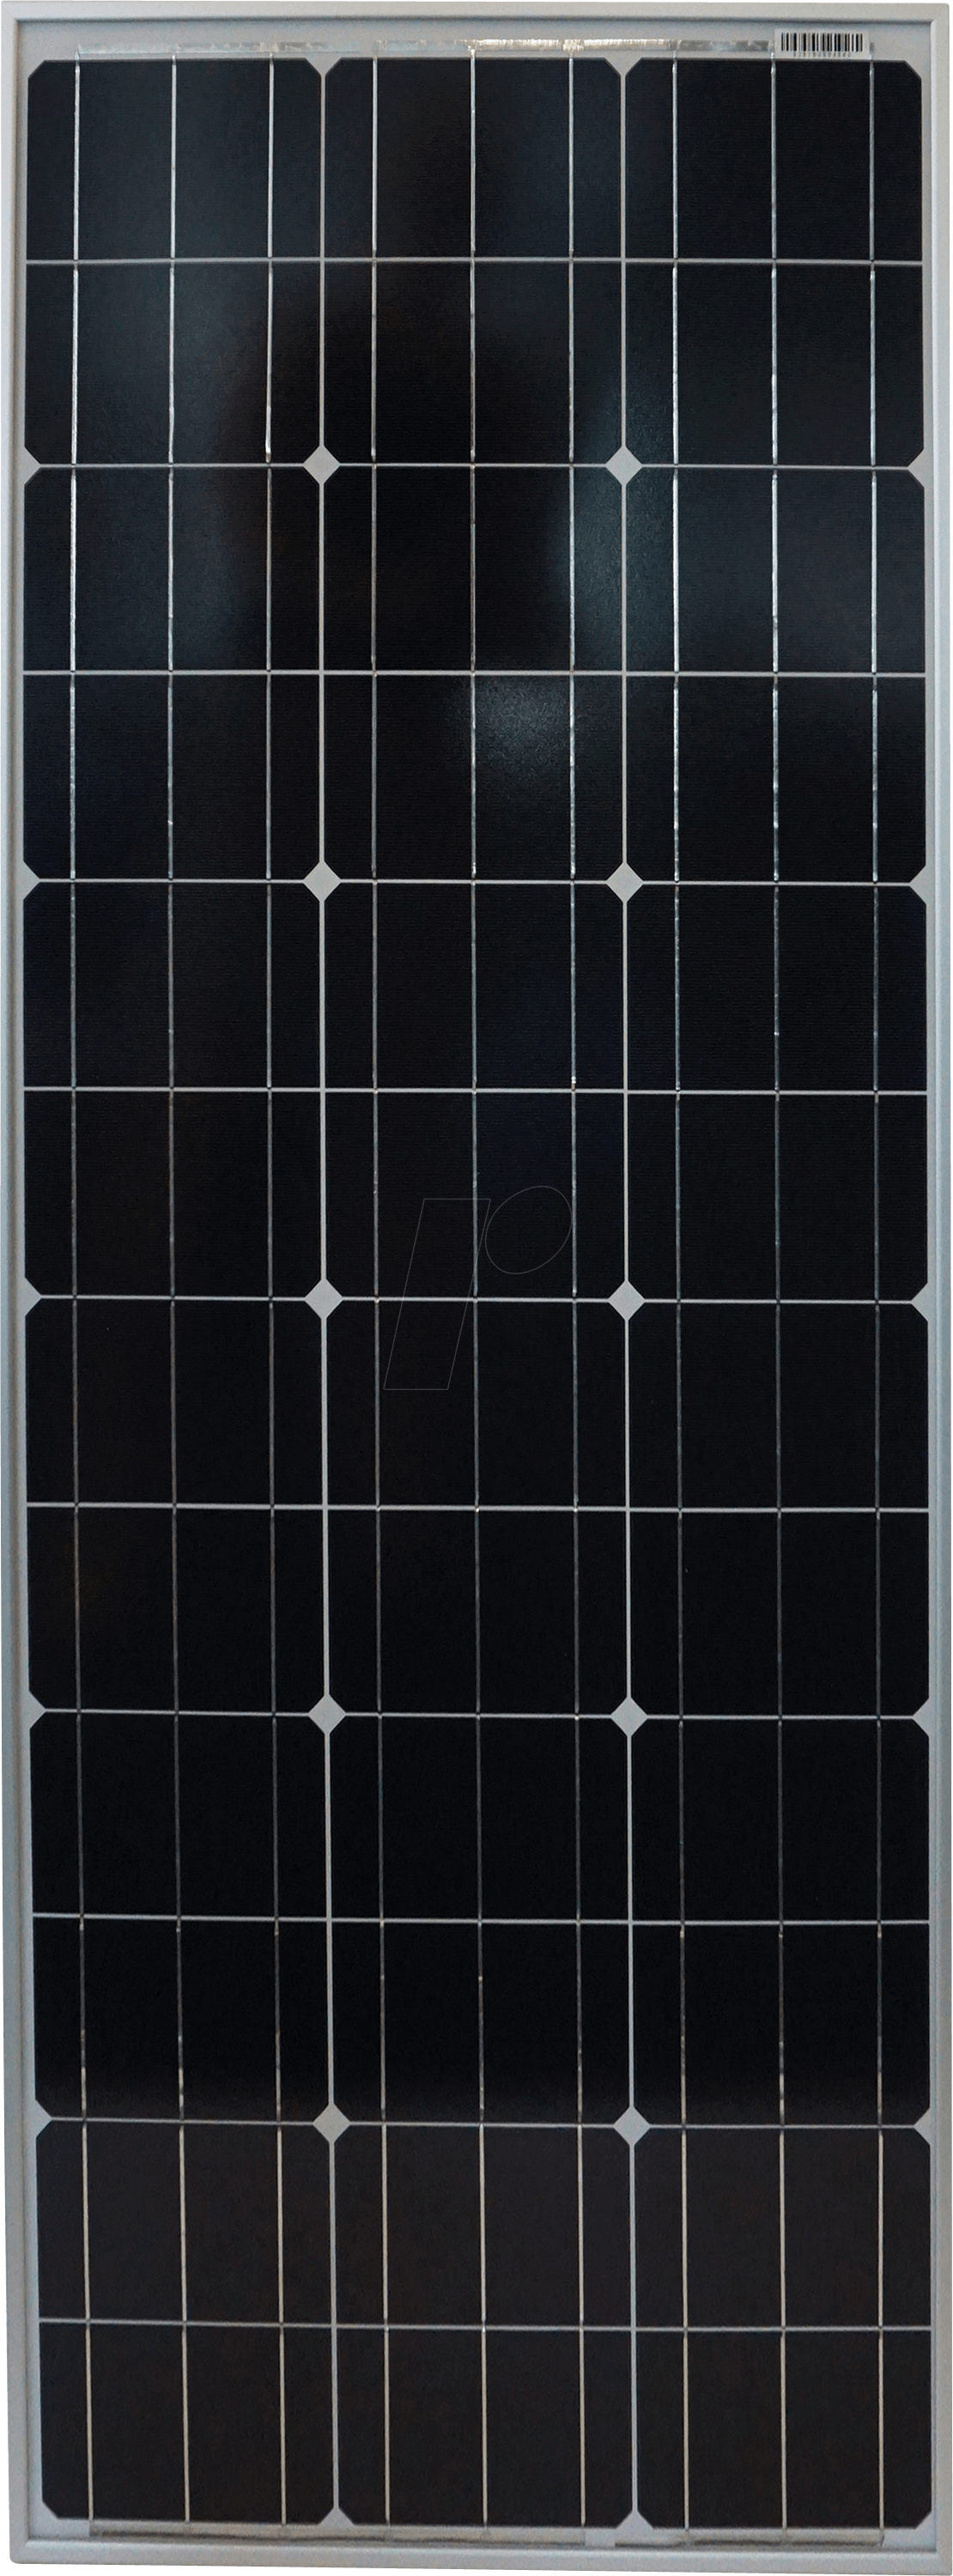 PHAE SP 140 - Solarpanel Sun Plus 140, 36 Zellen, 12 V, 140 W von PHAESUN